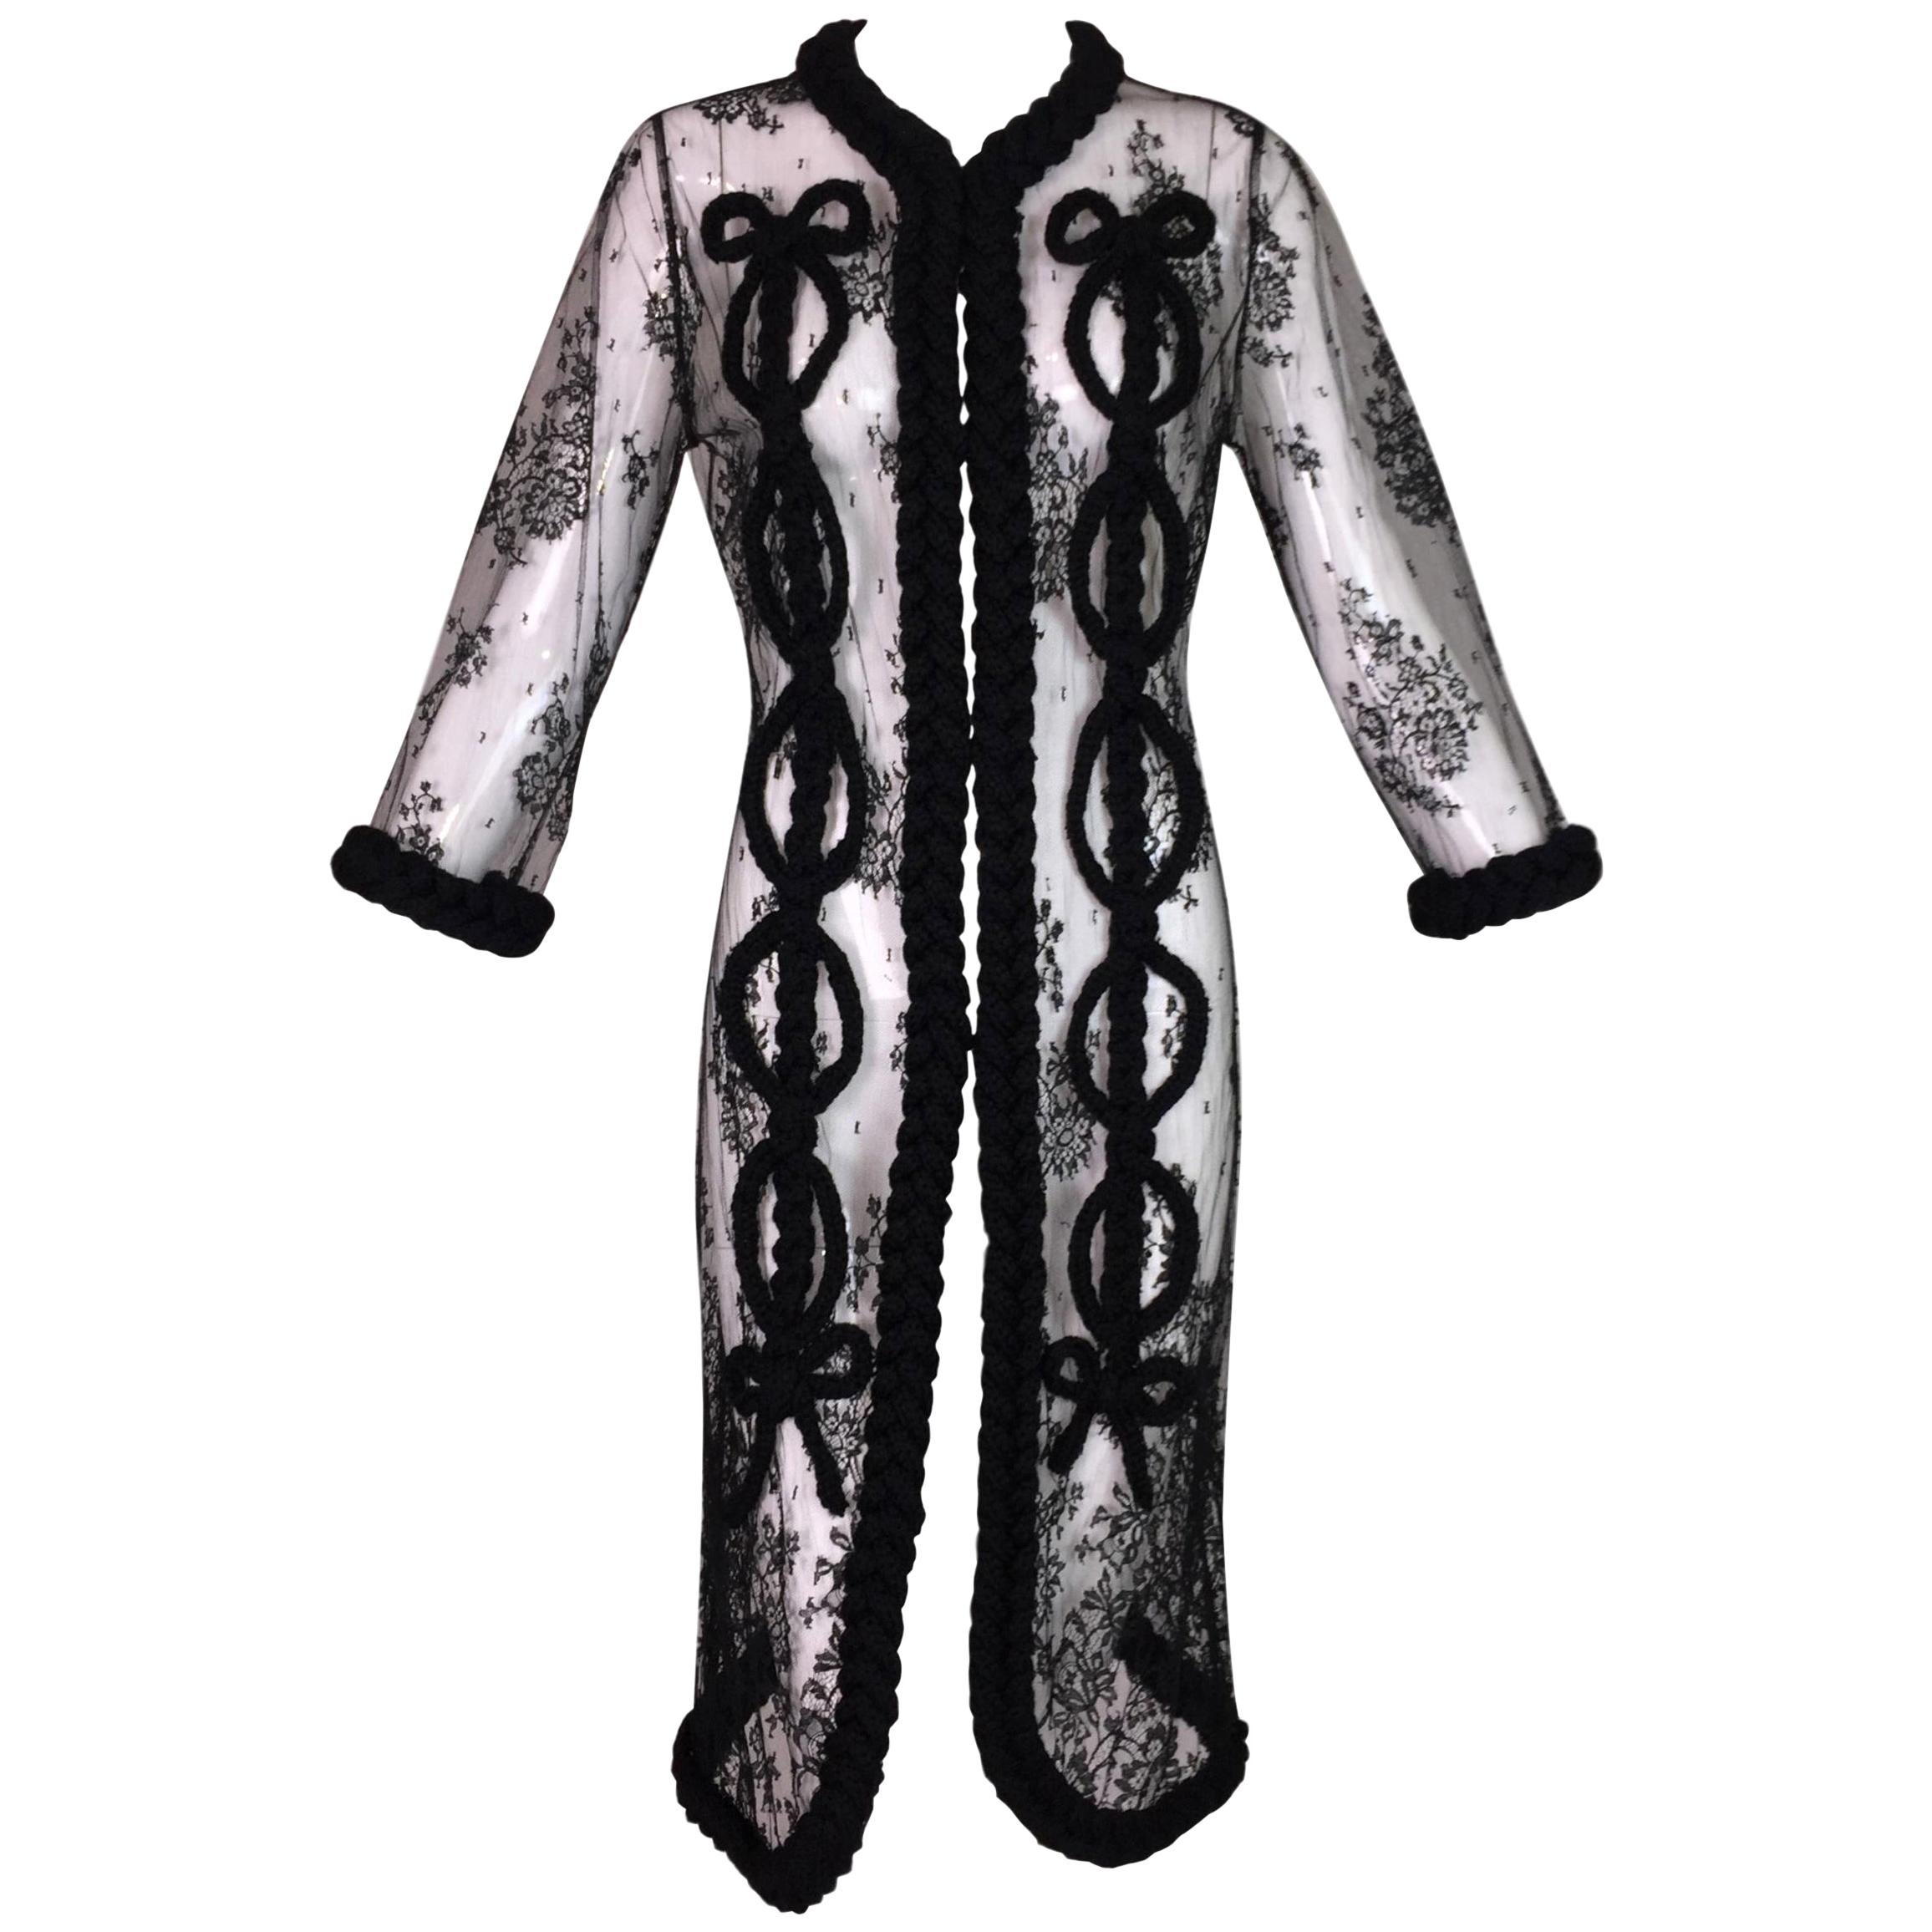 NWT S/S 2005 Christian Dior John Galliano Sheer Black Mesh Lace Dress Jacket